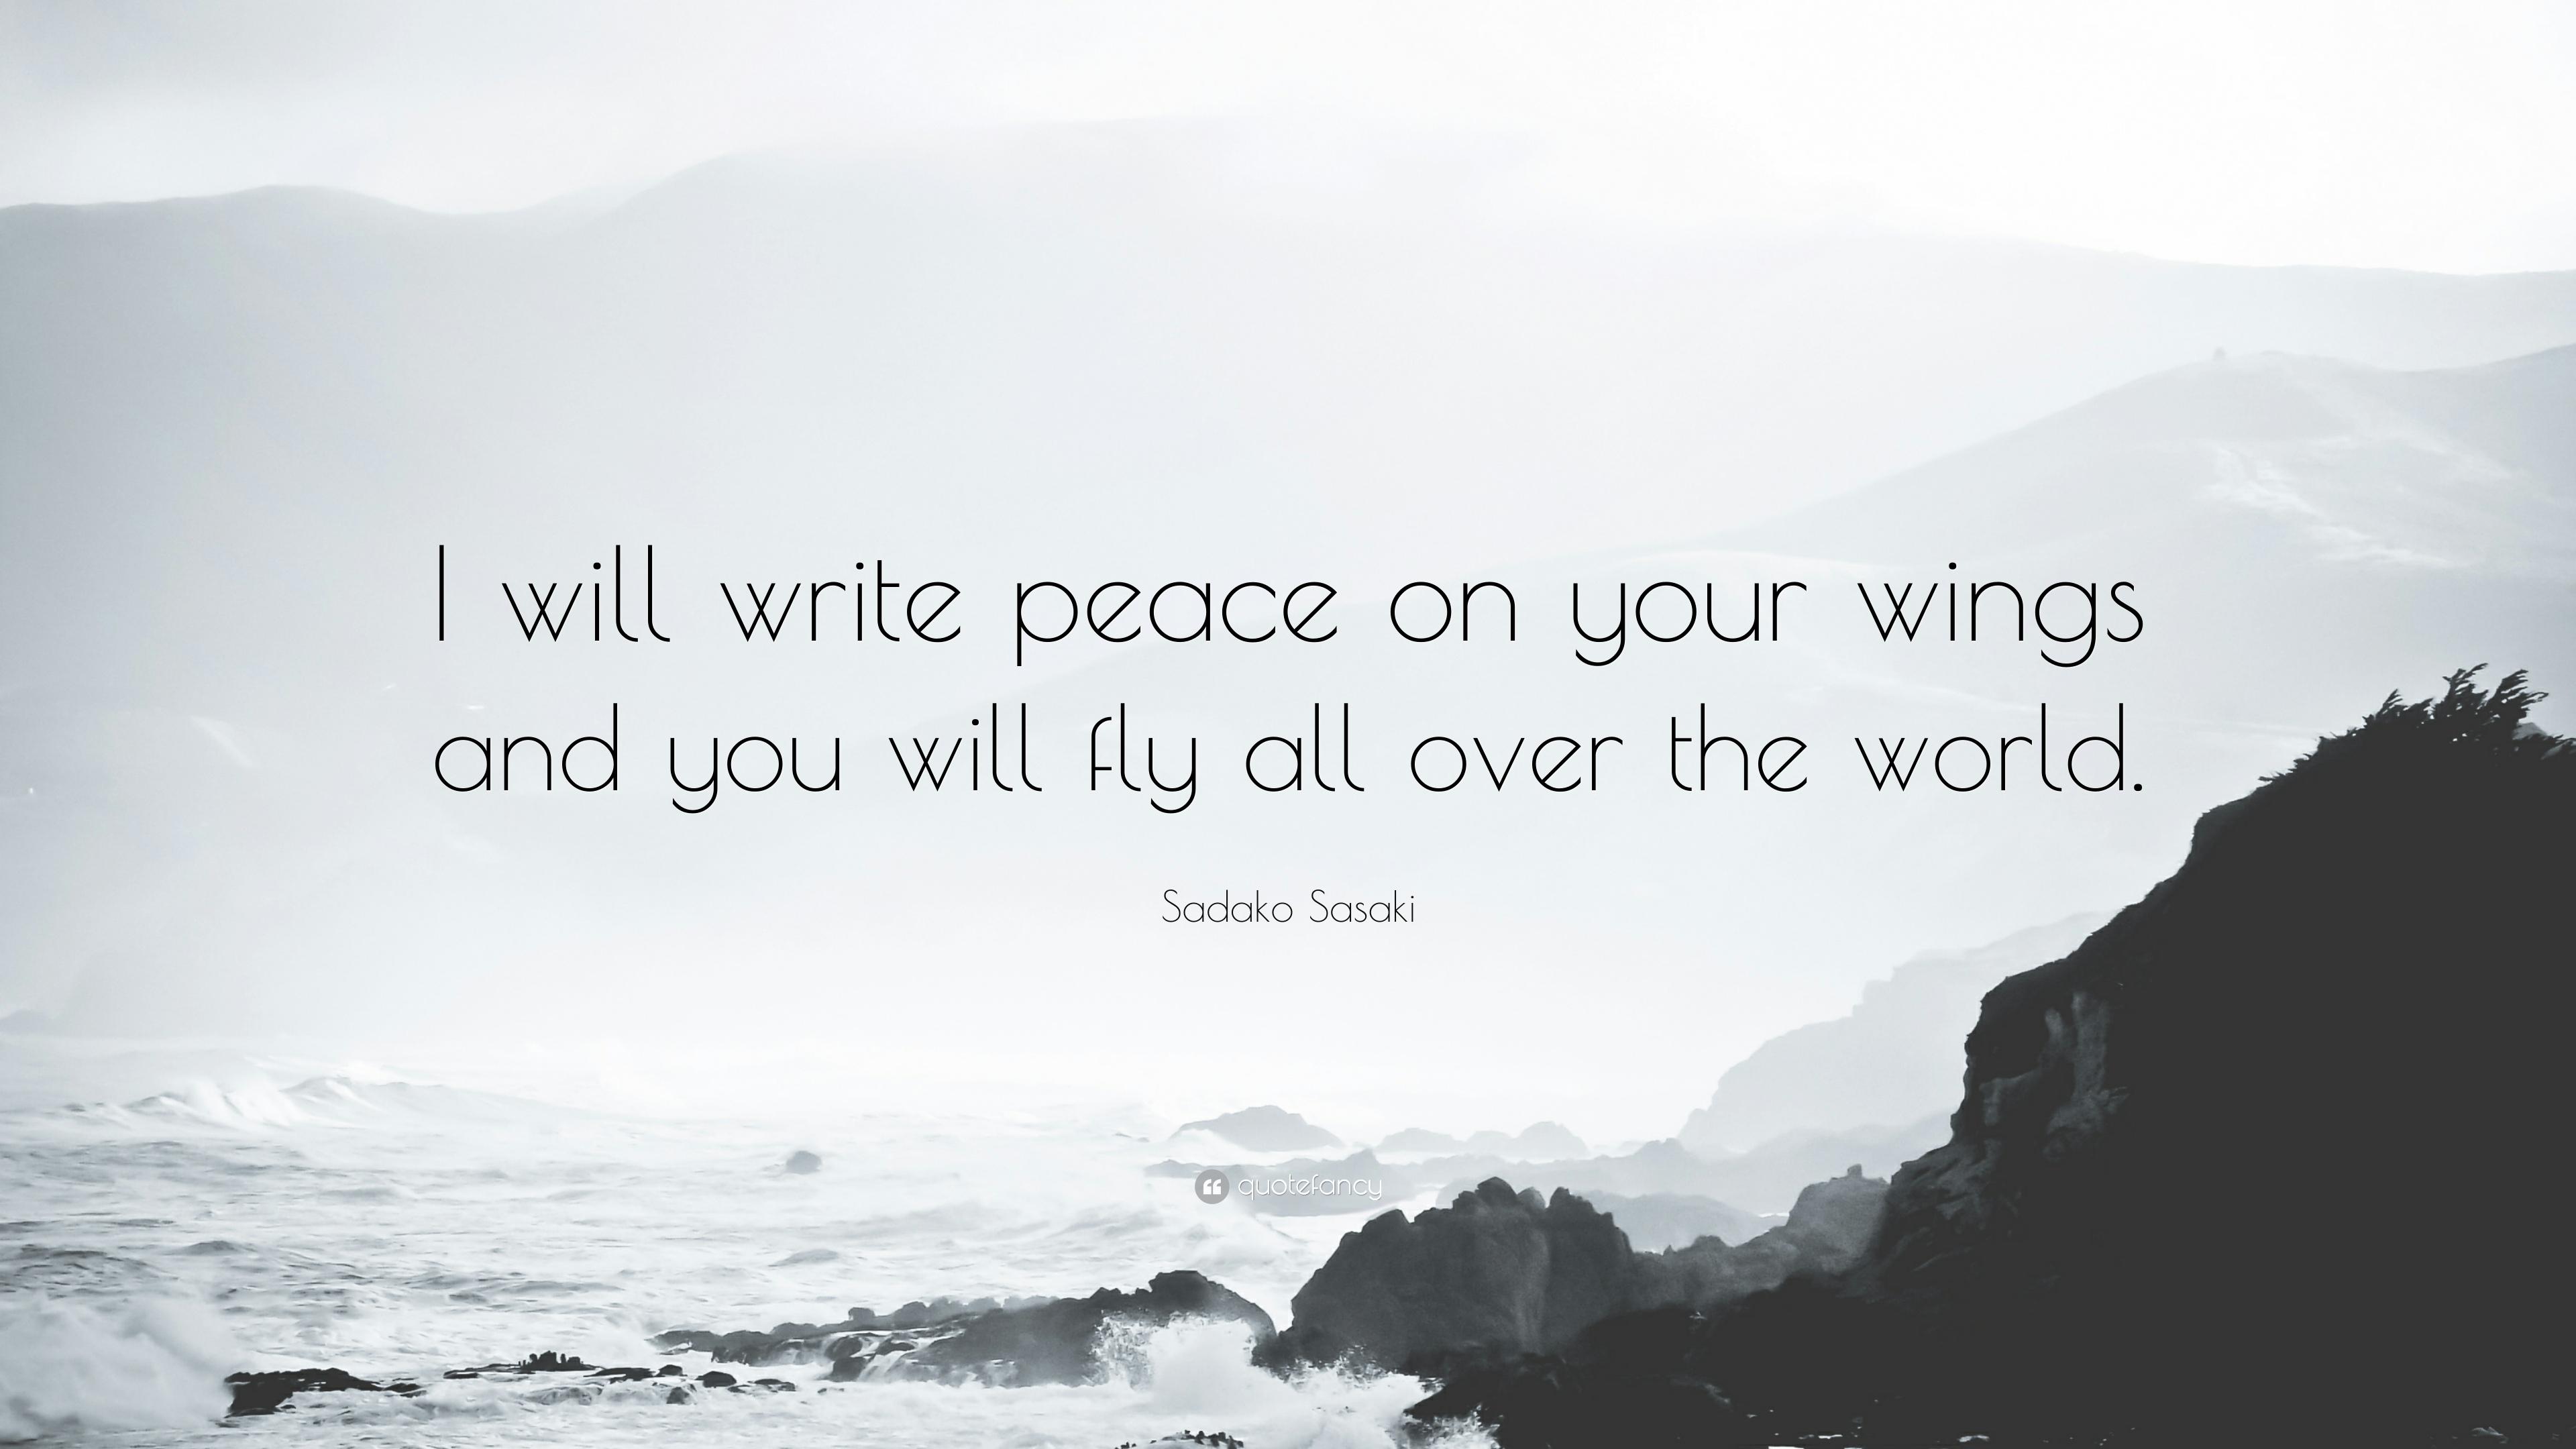 Sadako Sasaki Quote: “I will write peace on your wings